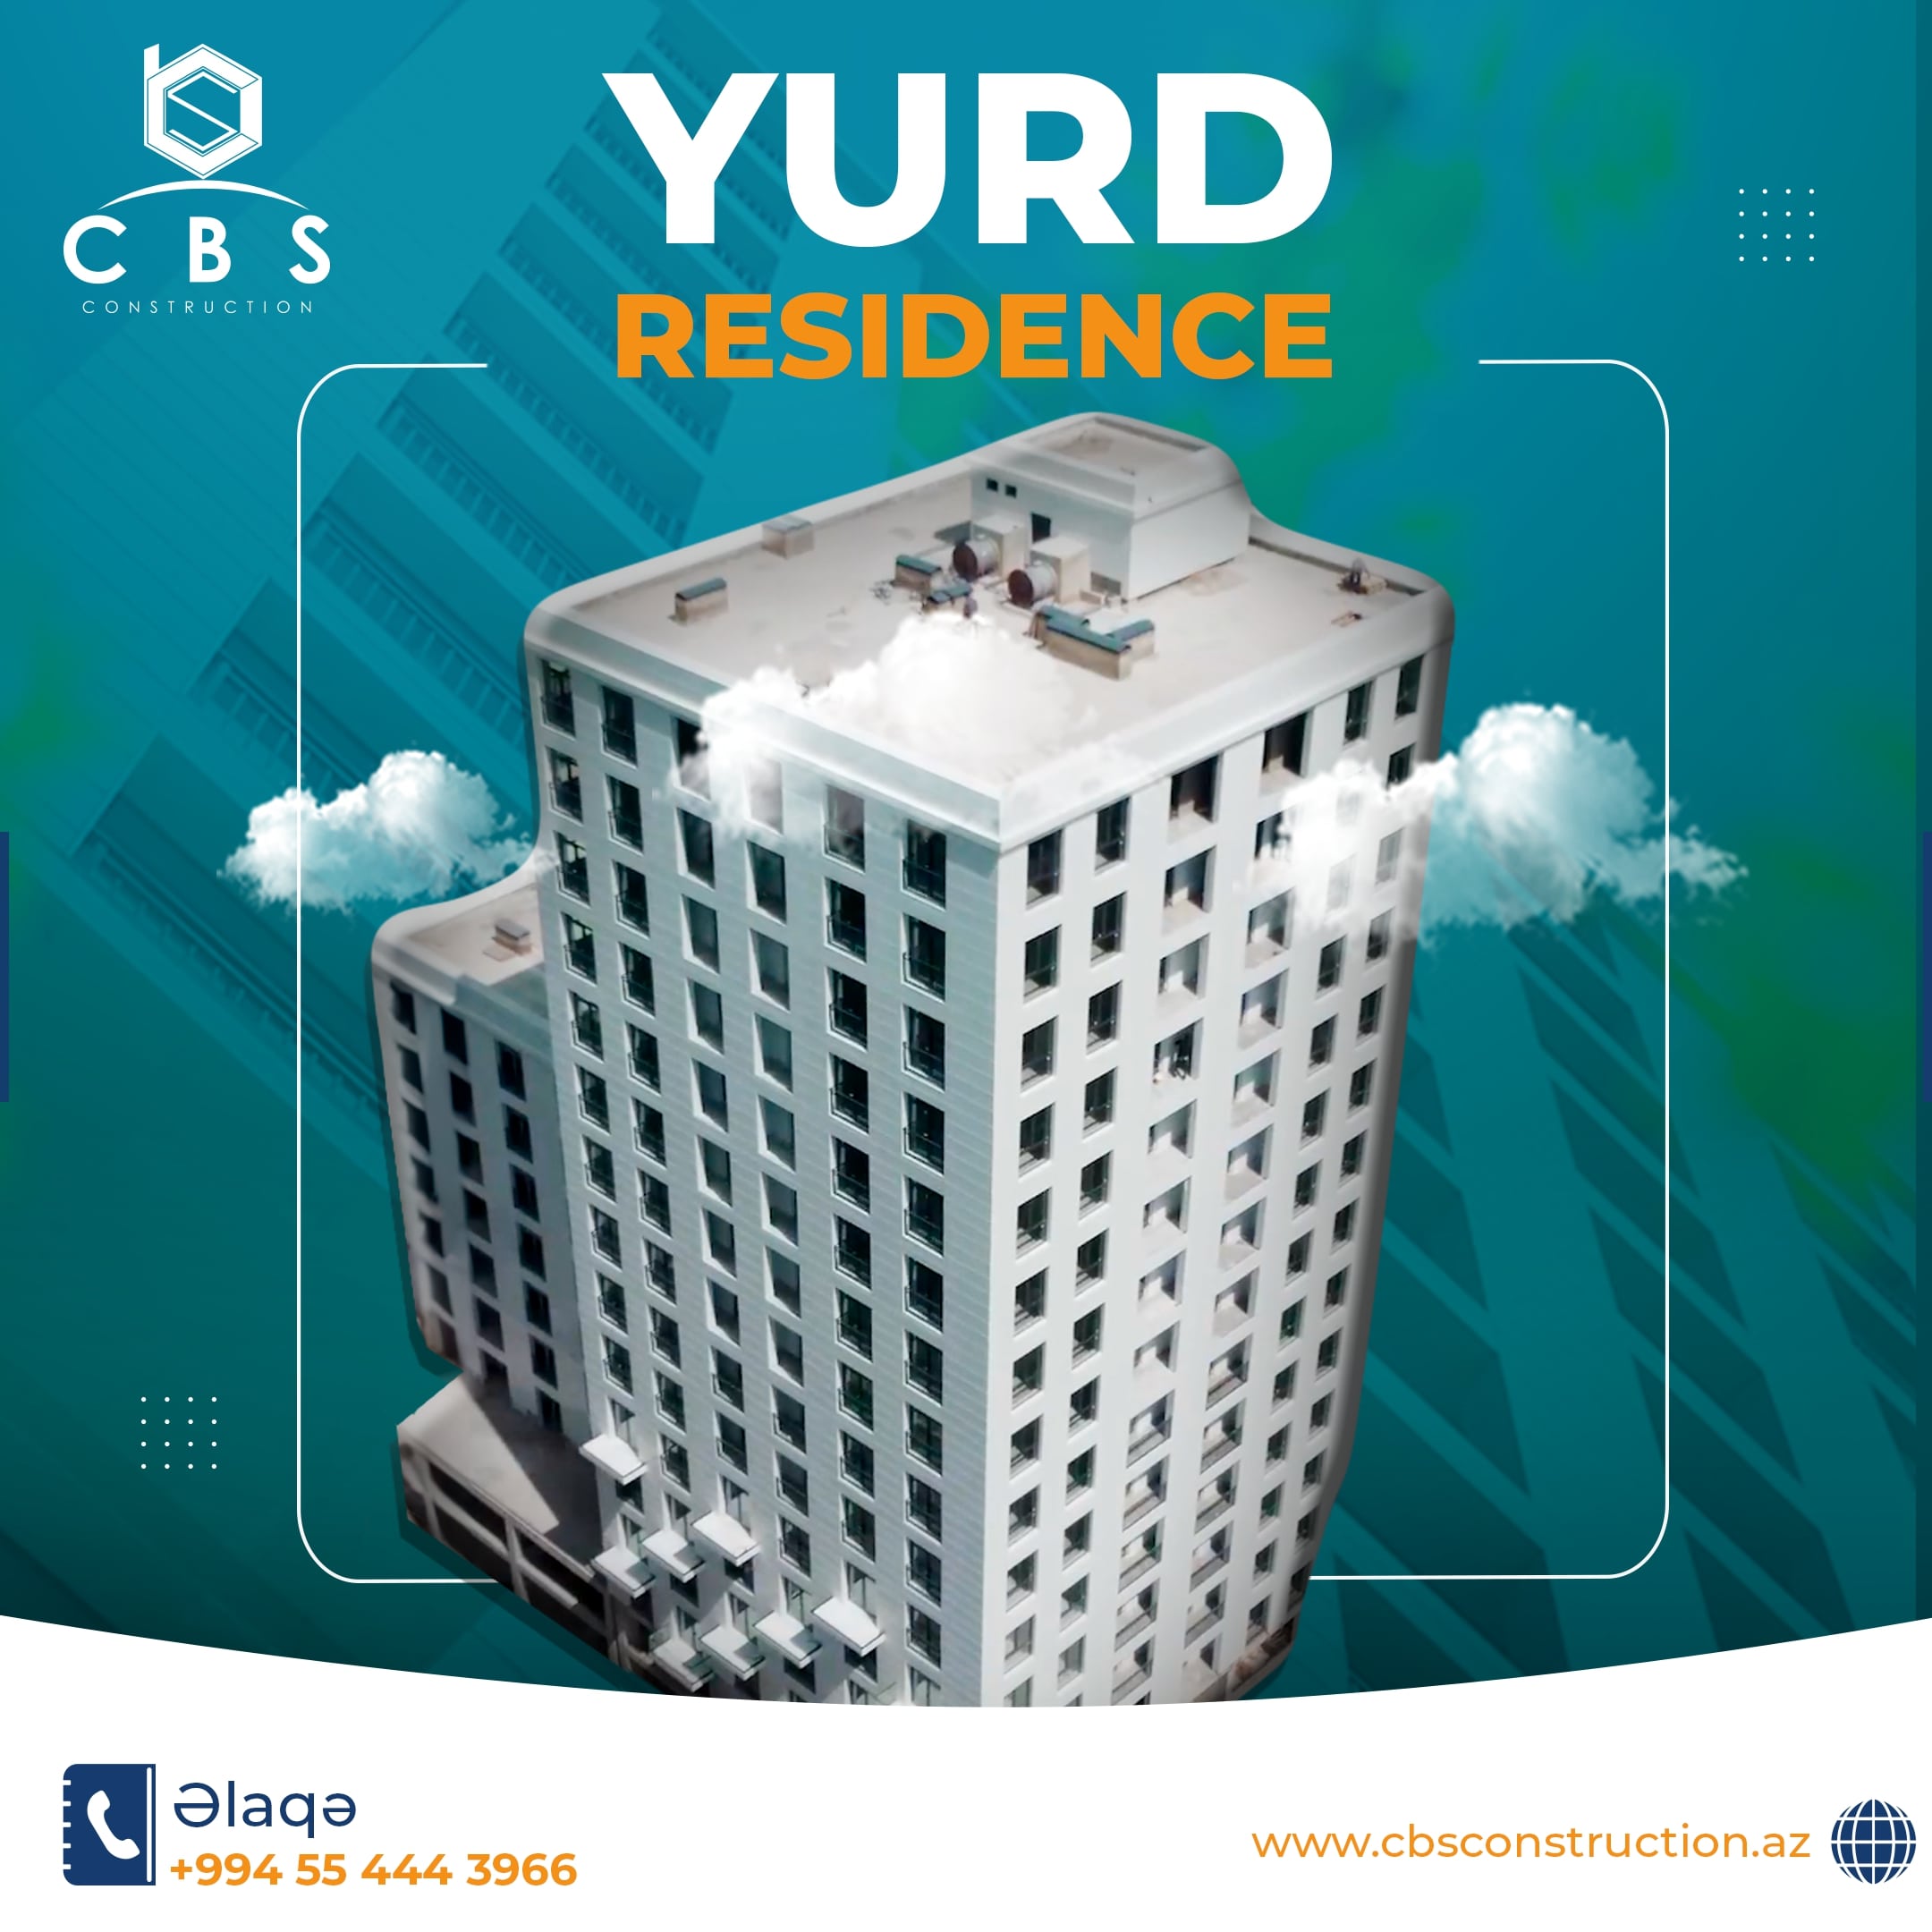 Yurd Residence